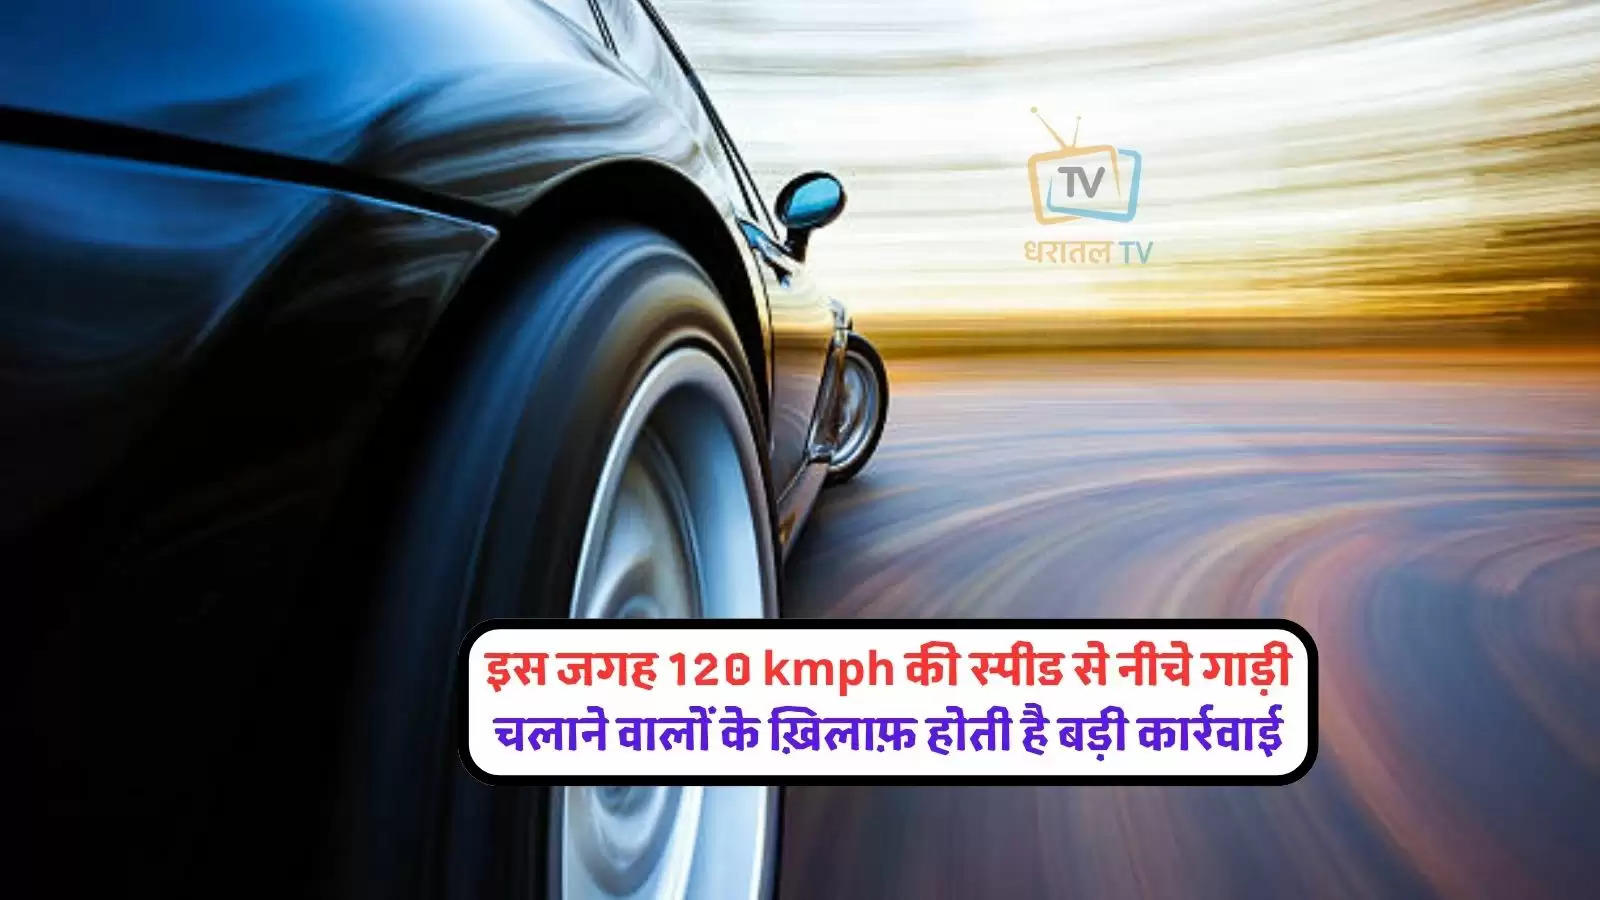 driving-below-minimum-speed-limit-in-uae-abu-dhabi-major-road-attracts-fine-of-9000-rupee